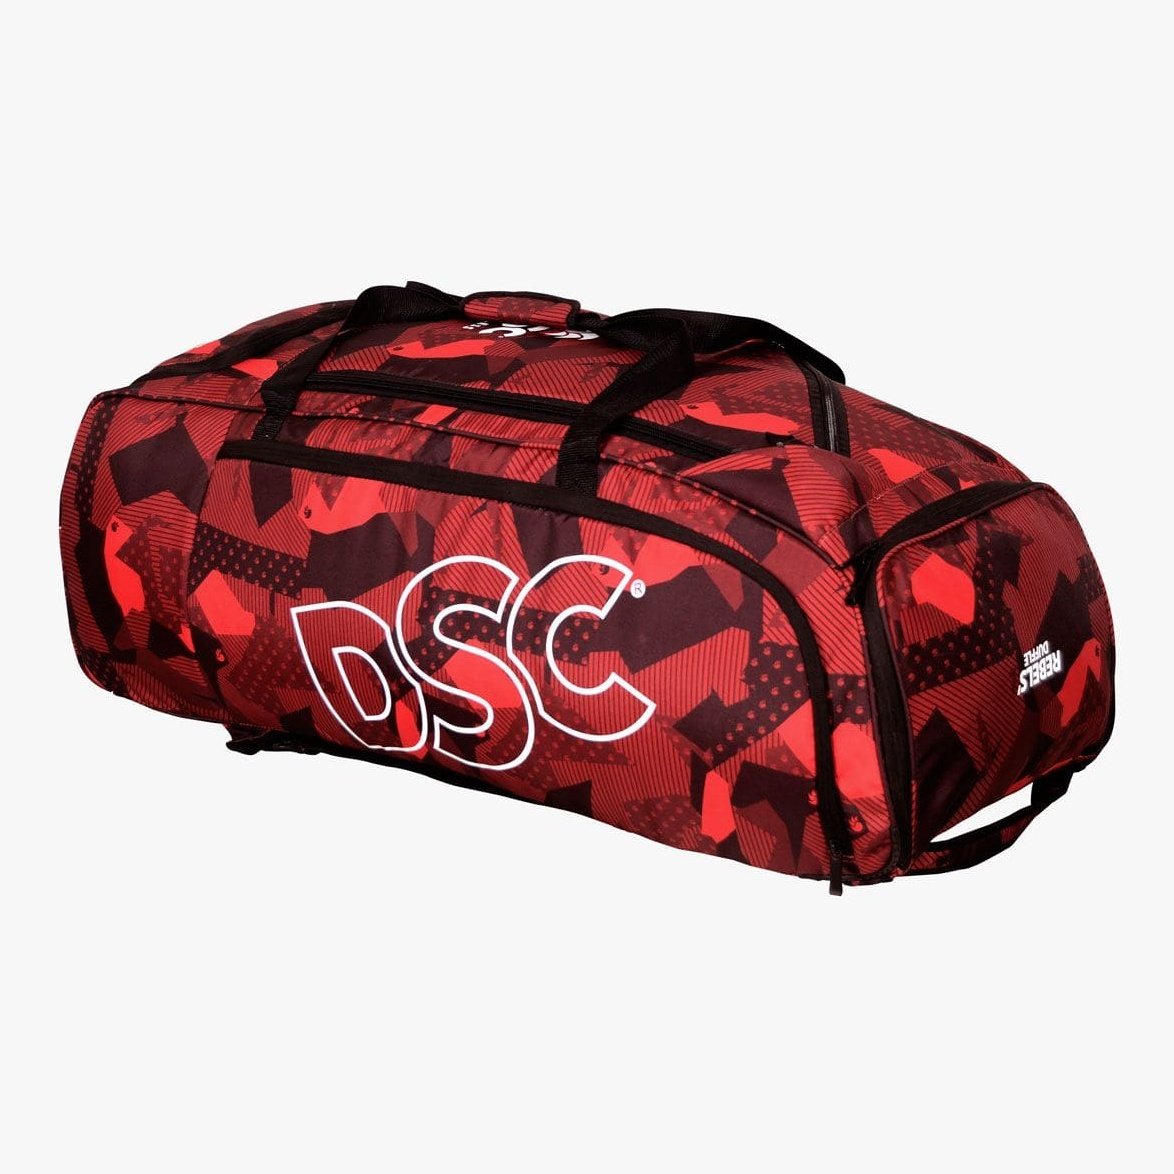 Adidas WicketKeeping DSC Rebel Pro Duffle with Wheels Cricket Bag